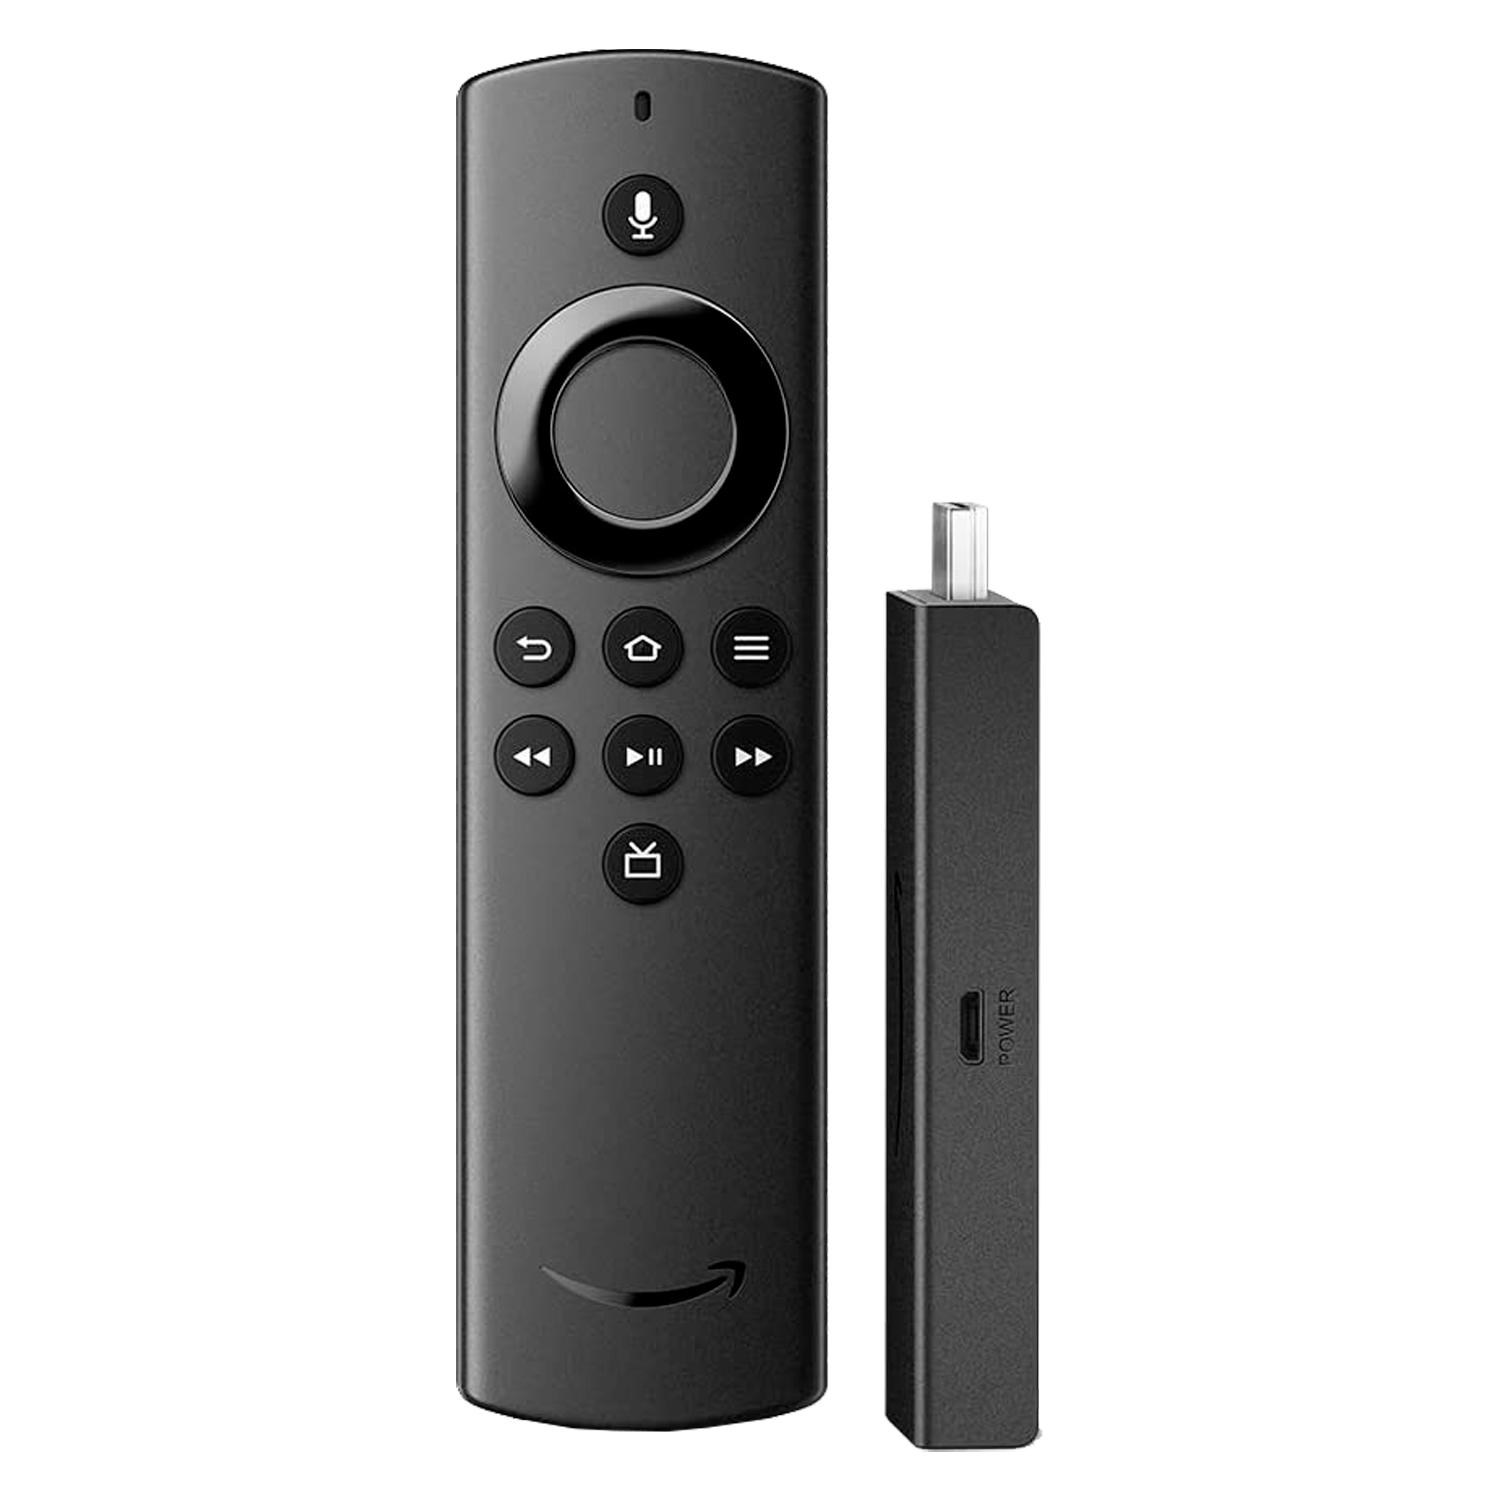 Amazon Fire TV Stick Lite Ful - (11141415DH)(566627)